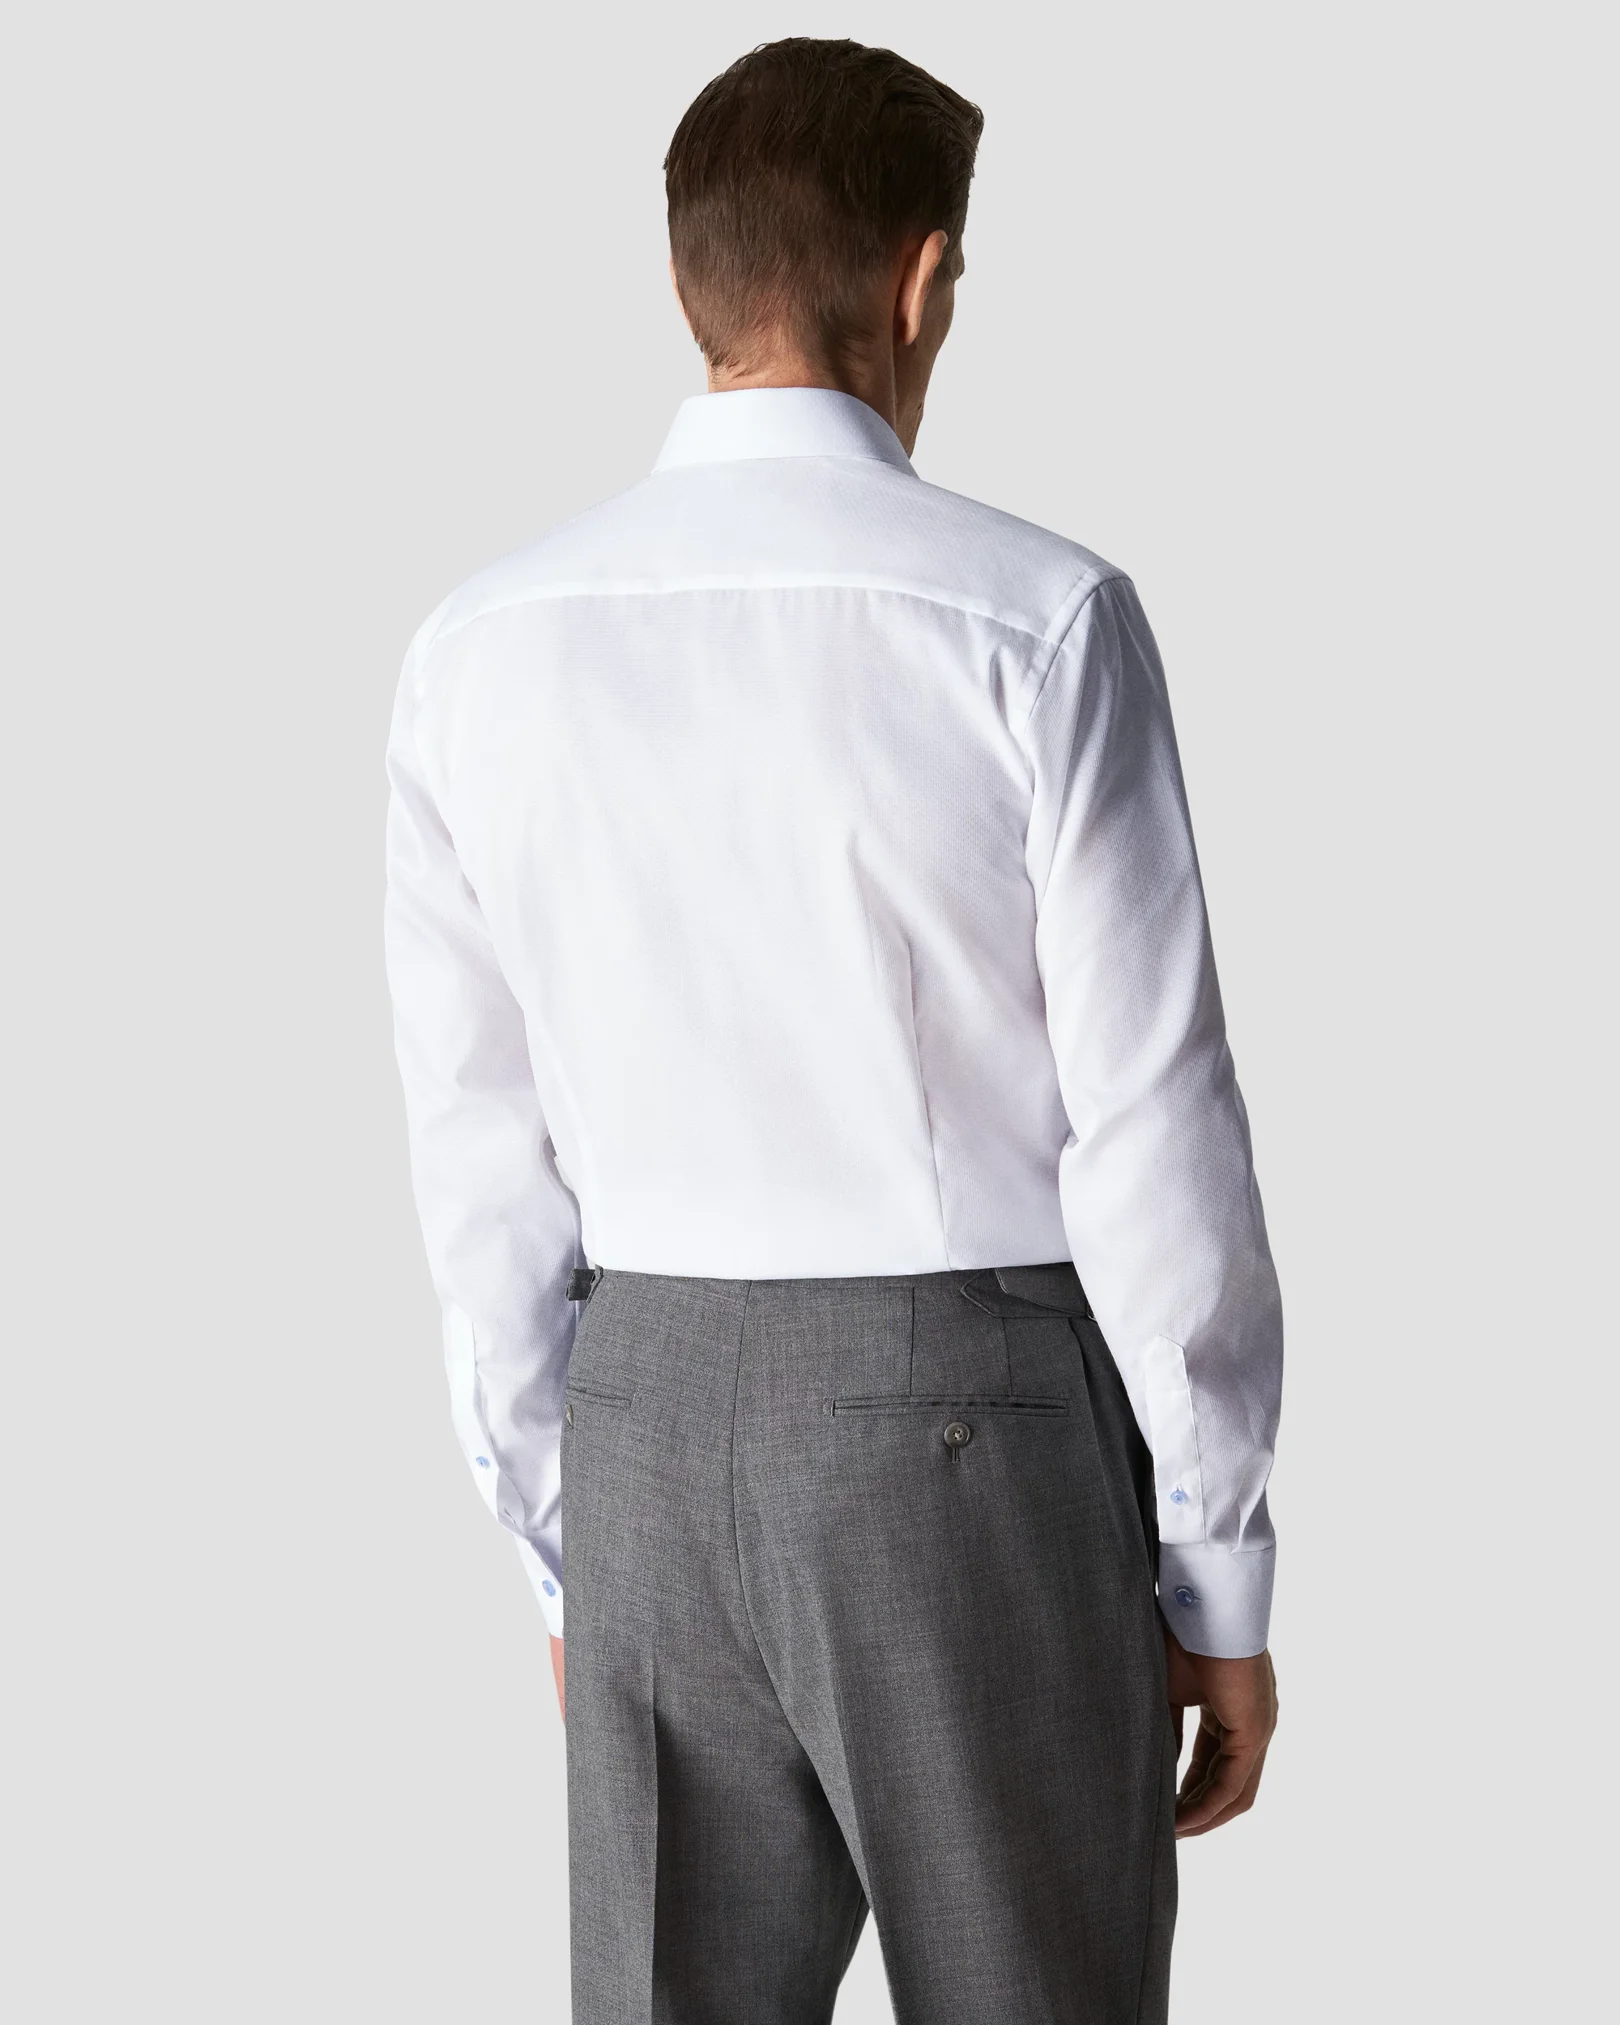 Calvin Klein Fine Line Dobby Long Sleeve Woven Shirt - Carbon